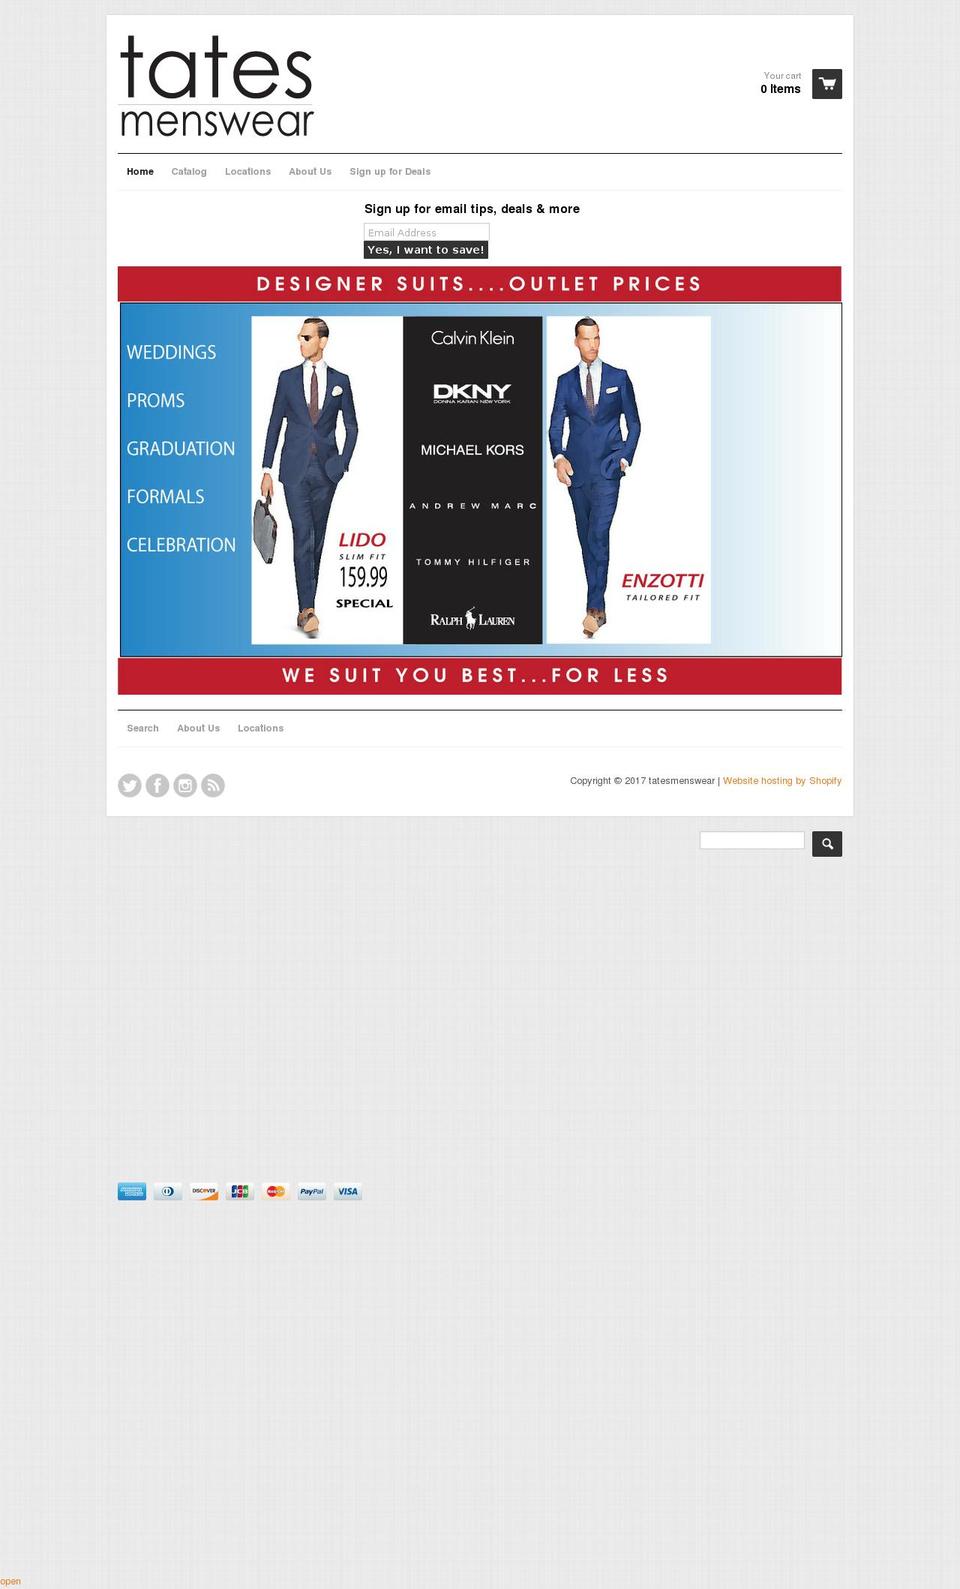 tatesmenswear.com shopify website screenshot